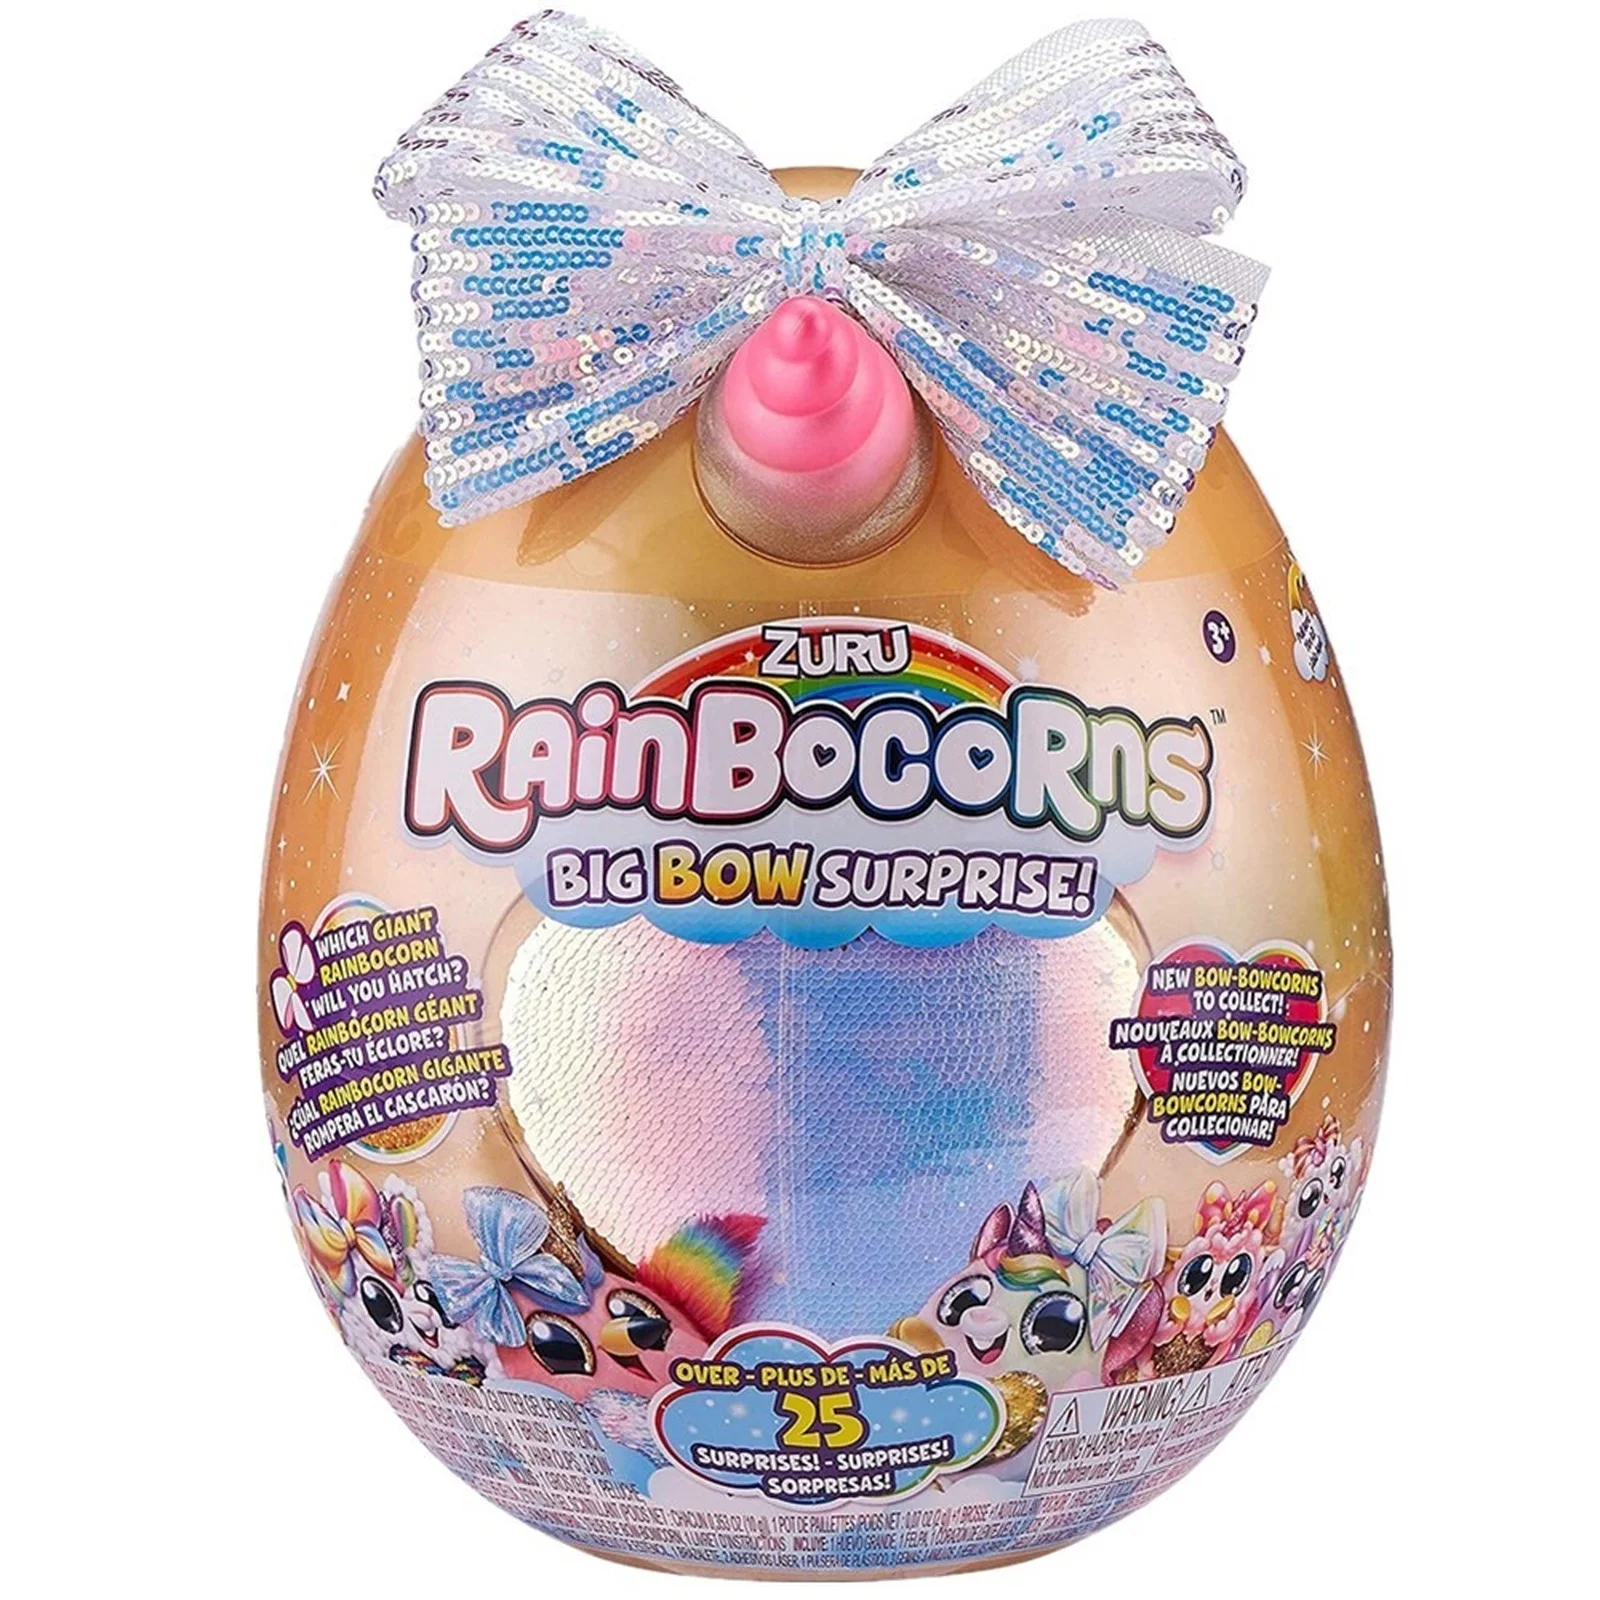 Rainbocorns Big Bow Surprise GOLD Egg To Hatch w/ OVER 25 SURPRISES BRAND NEW 